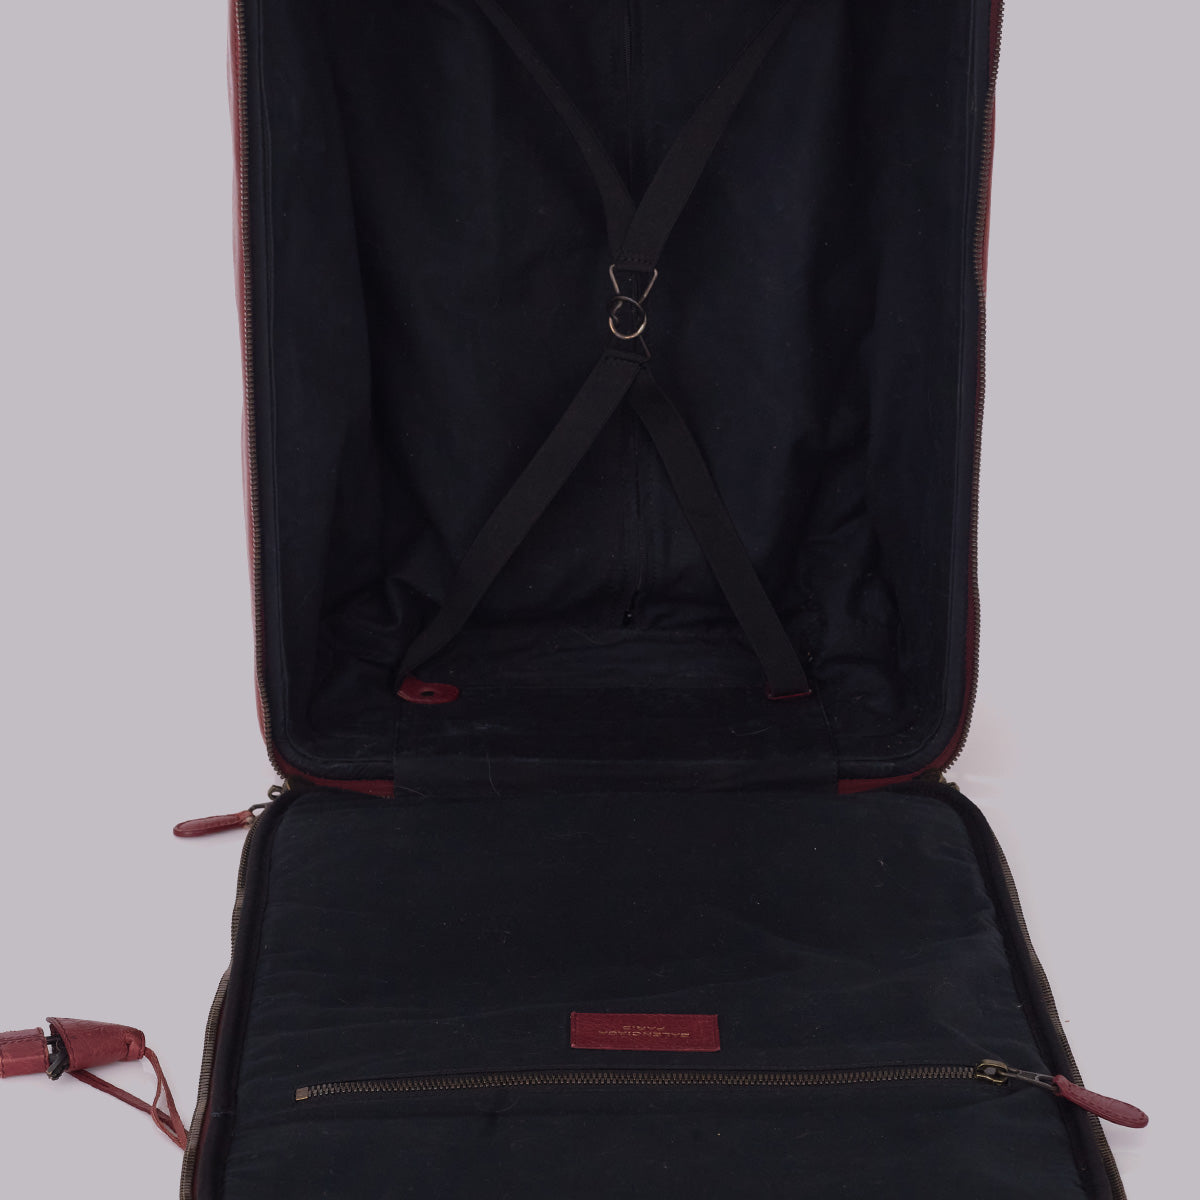 Mala Balenciaga Classic Voyage Carry On Suitcase